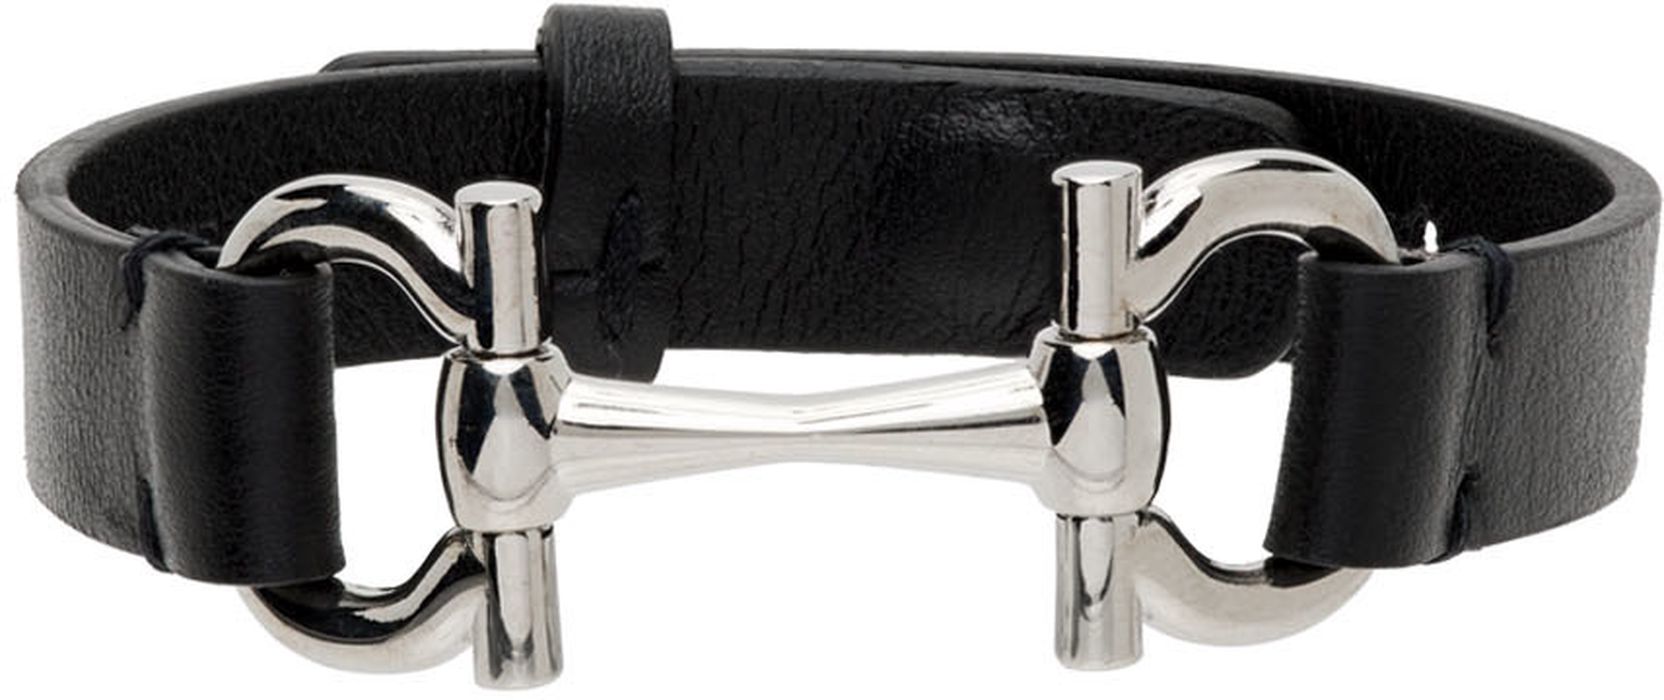 Salvatore Ferragamo Black Leather Horsebit Bracelet